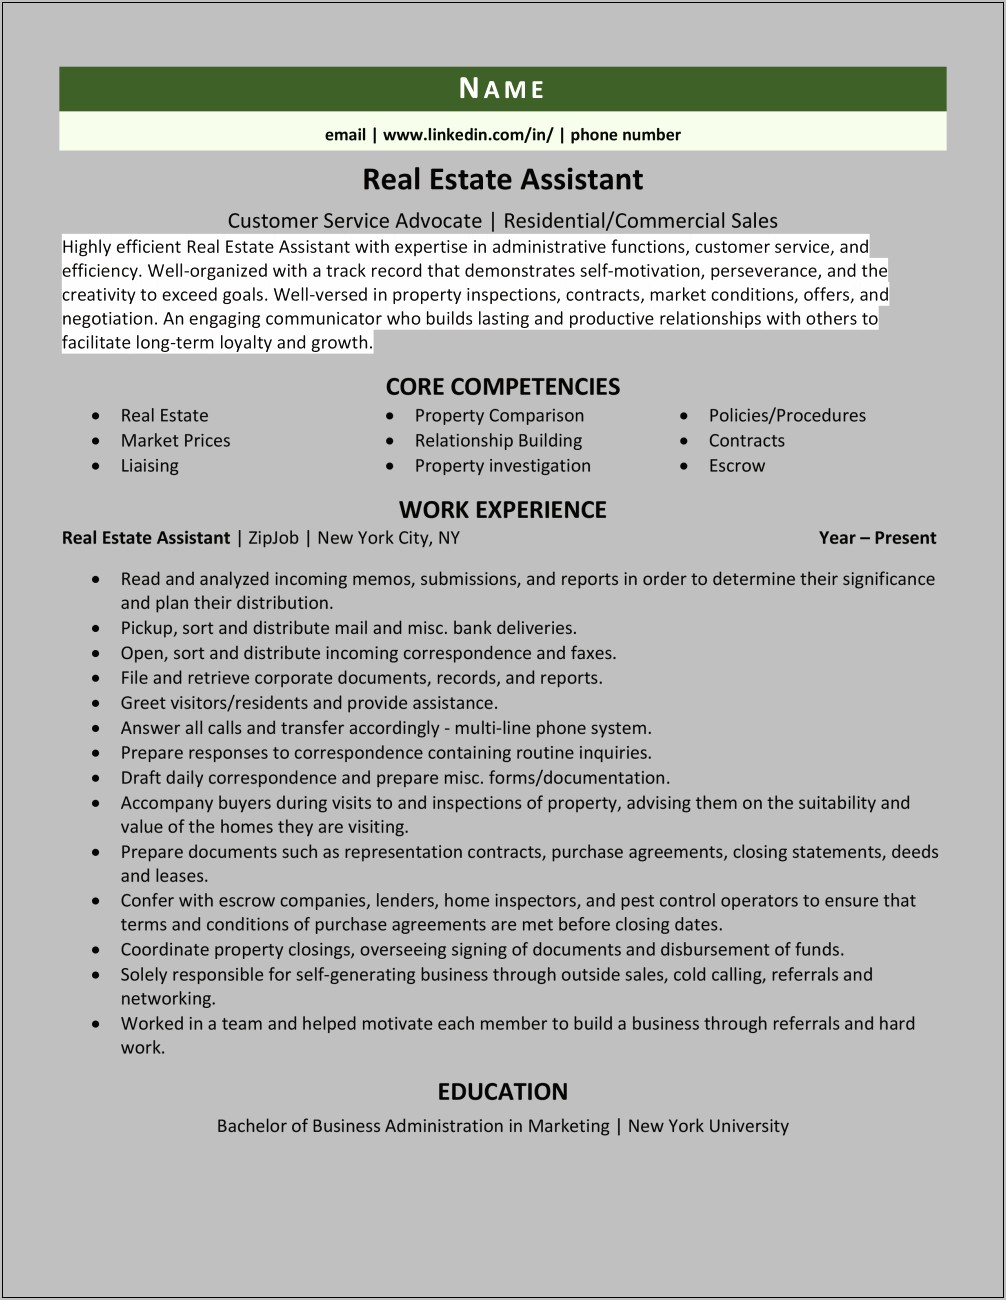 Real Estate Assistant Job Description Resume